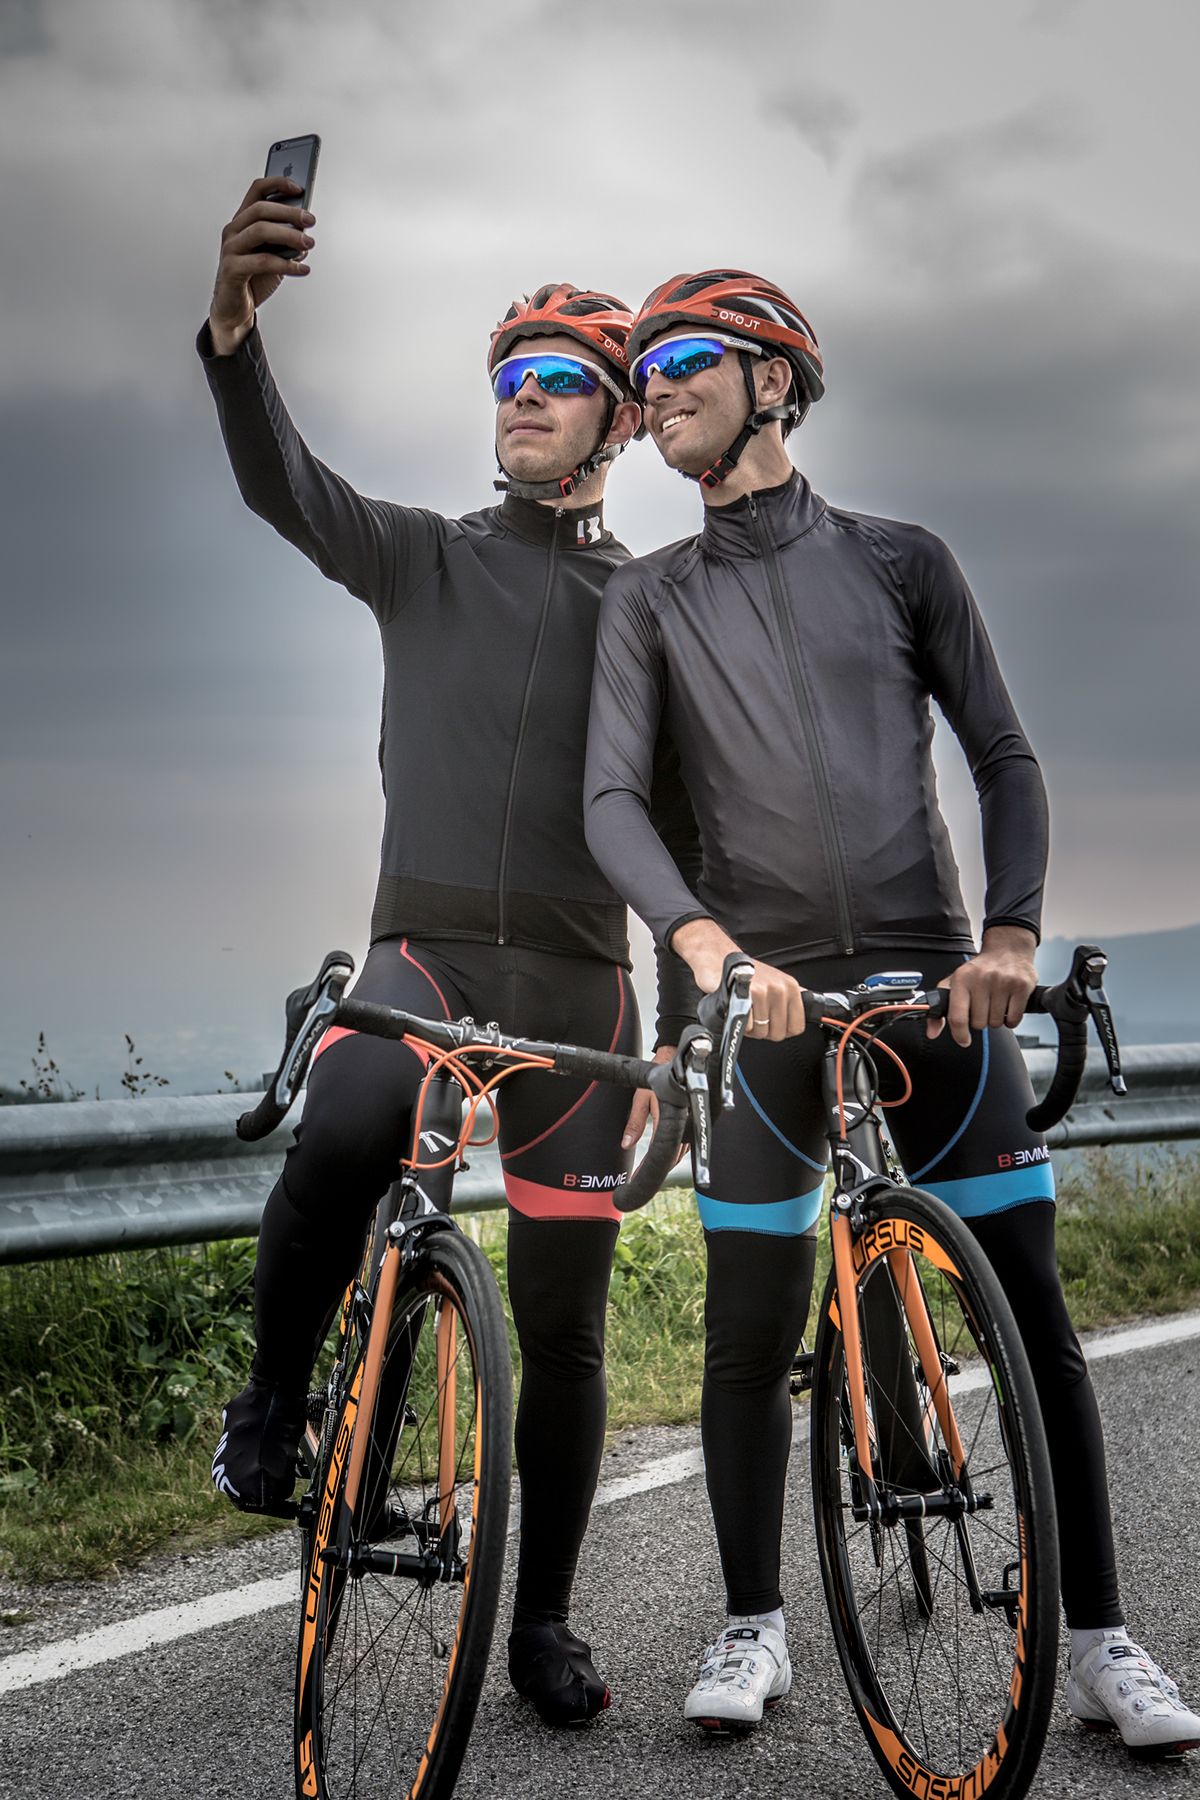 Cycling apparel Bike road digitalmovie.it matteomescalchin lighting action sport